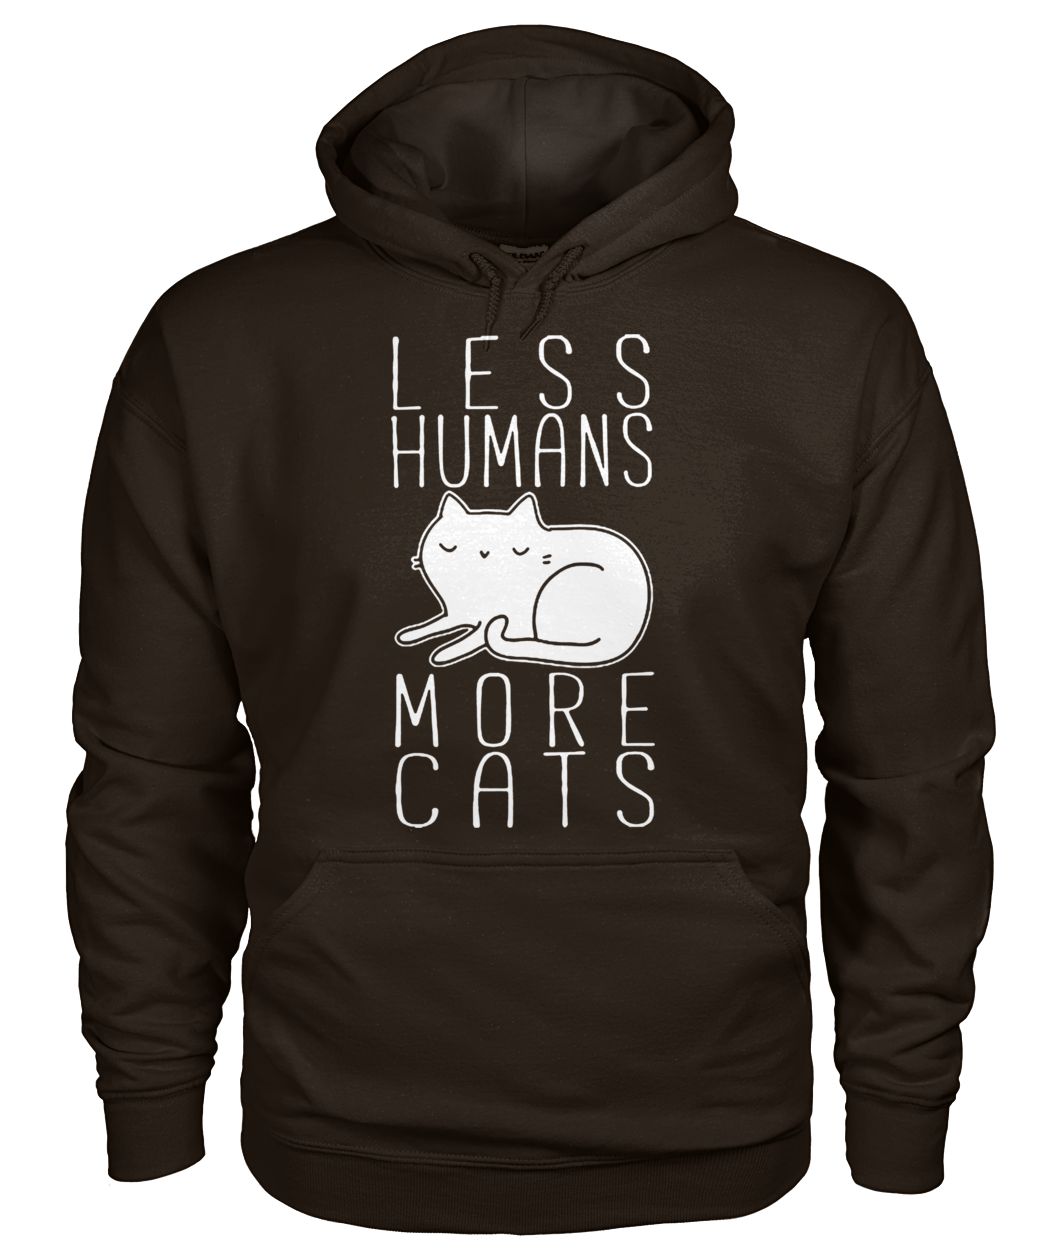 Less humans more cats gildan hoodie